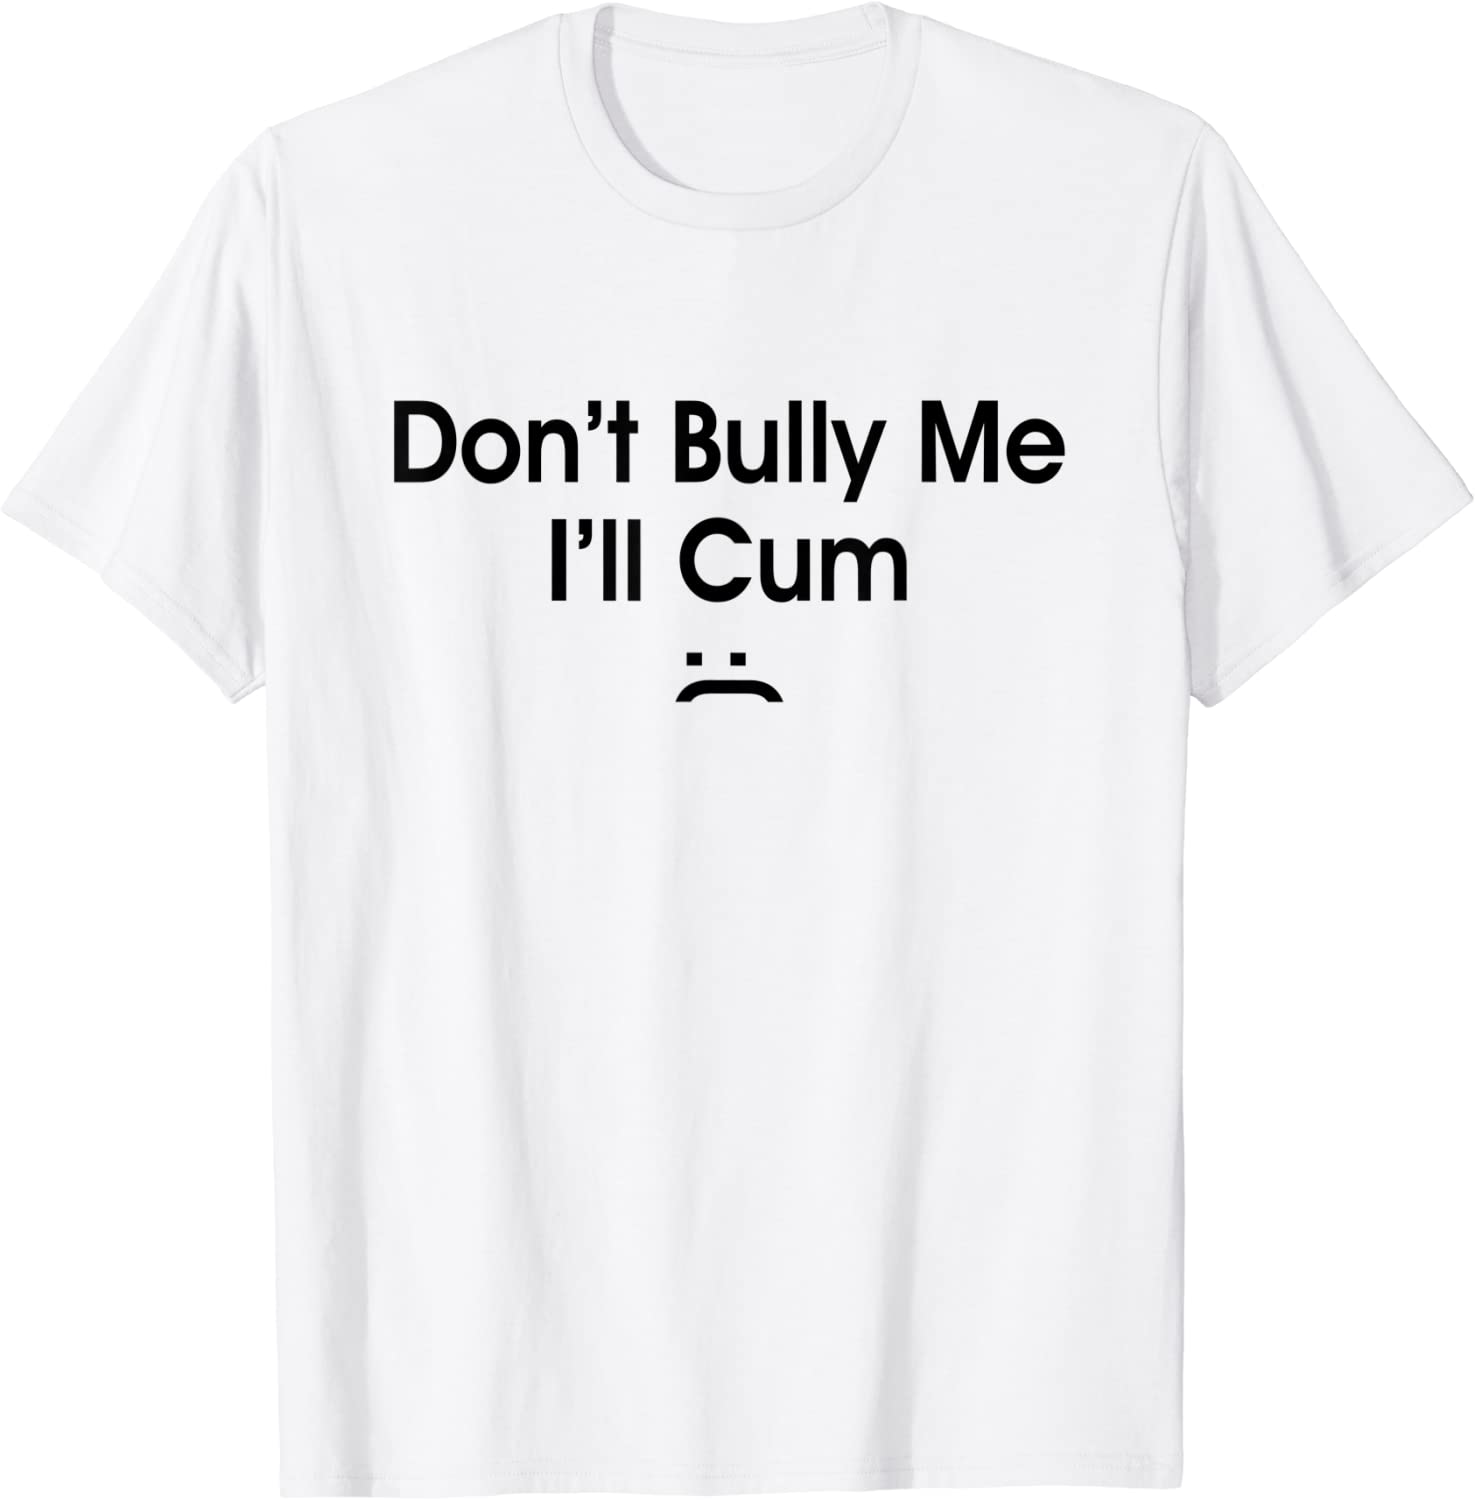 Don't Bully Me I'll Cum (48)